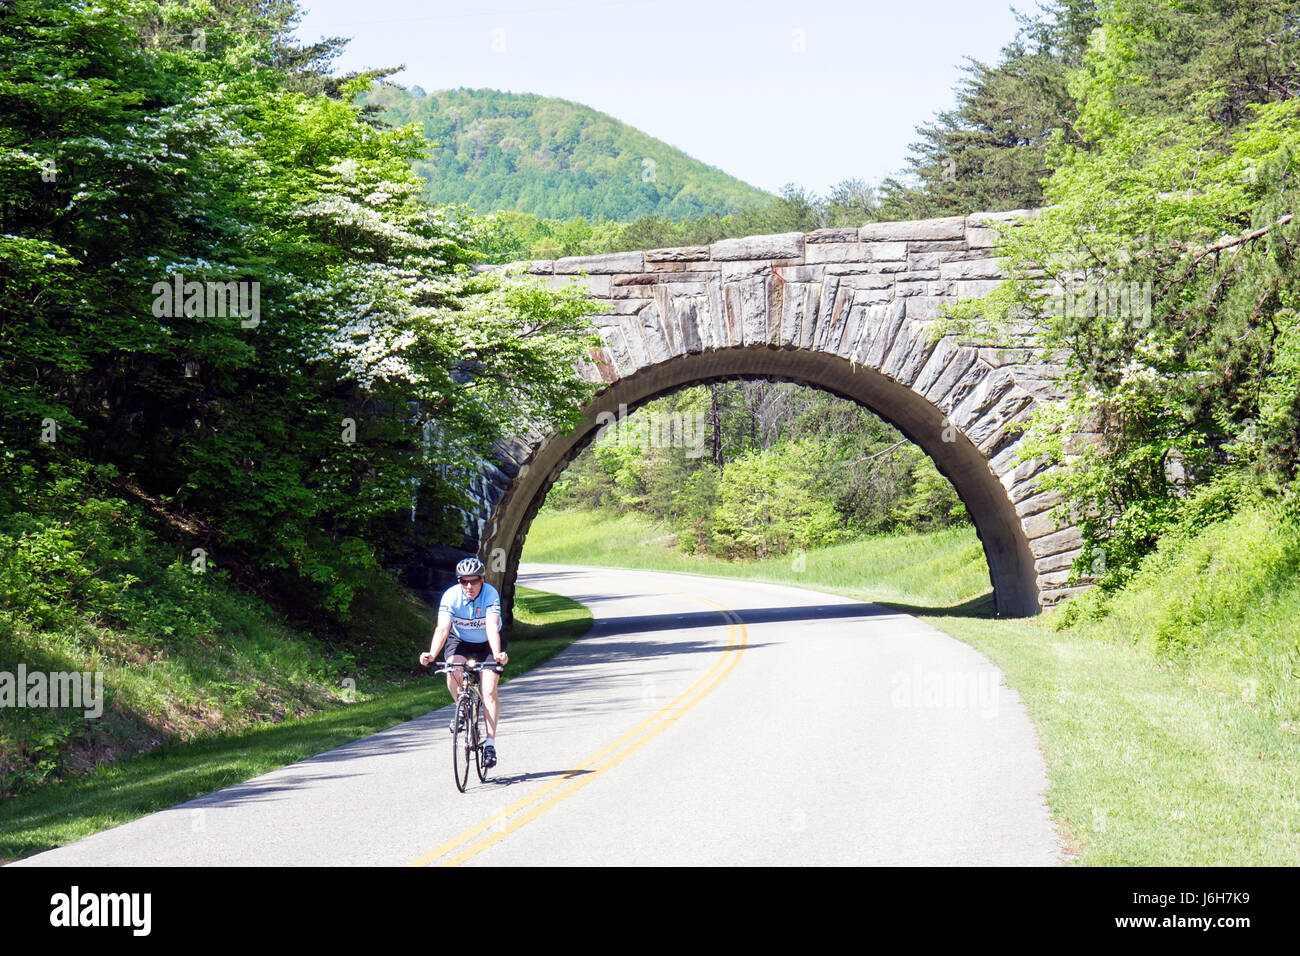 Roanoke Virginia, Blue Ridge Parkway, Appalachian Mountains, Steinbrücke, Radfahrer, Fahrrad, Radfahren, Reiten, Radfahren, Fahrer, Fahrrad, Männer Männer Erwachsene Erwachsene, VA Stockfoto